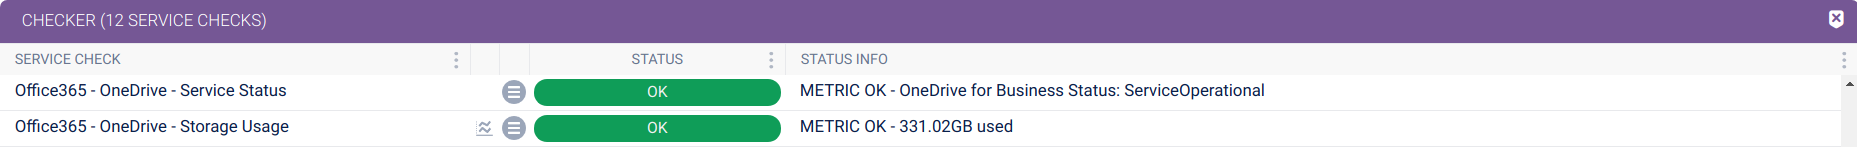 Office 365 OneDrive Service Checks